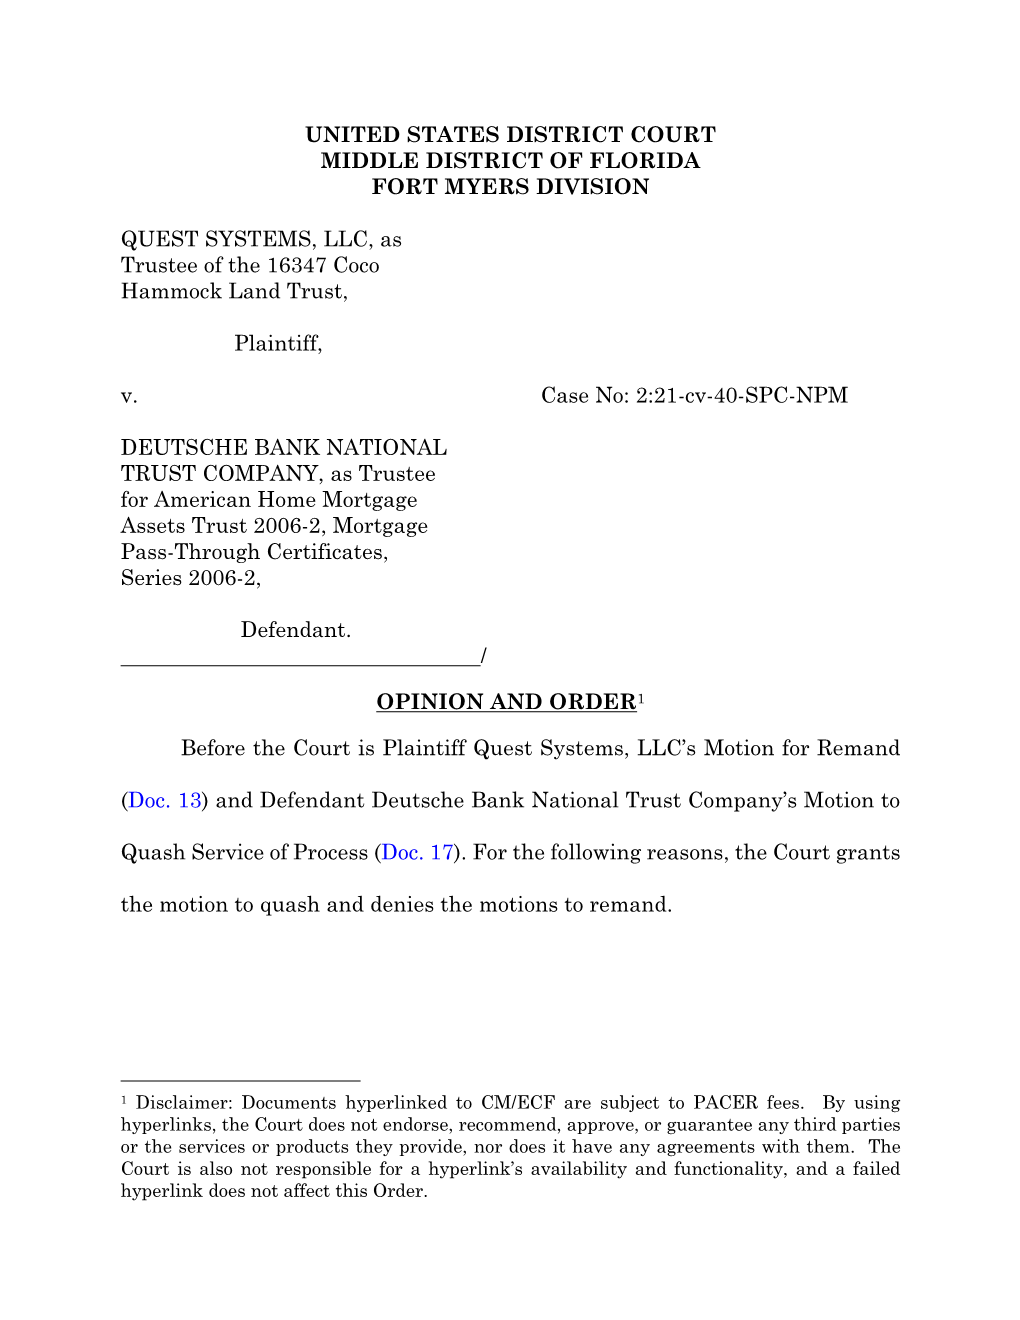 Plaintiff Quest Systems, LLC's Motion for Remand (Doc. [13])